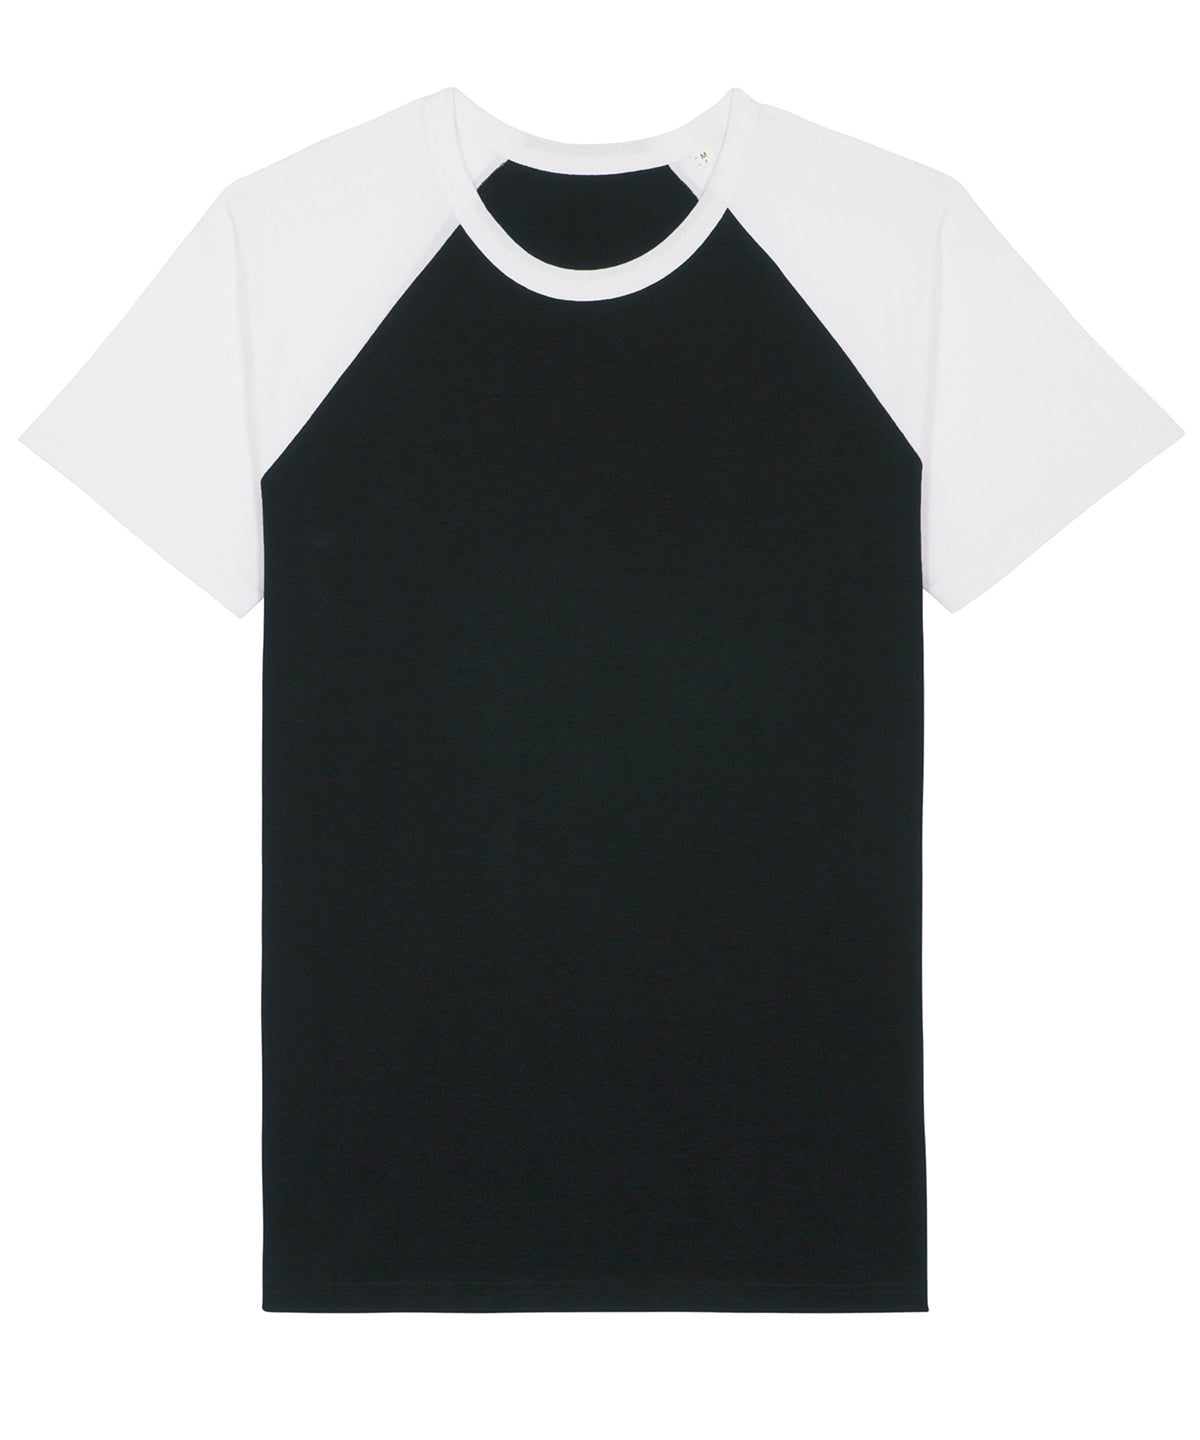 Stuttermabolir - Catcher Unisex Short Sleeve T-shirt (STTU825)